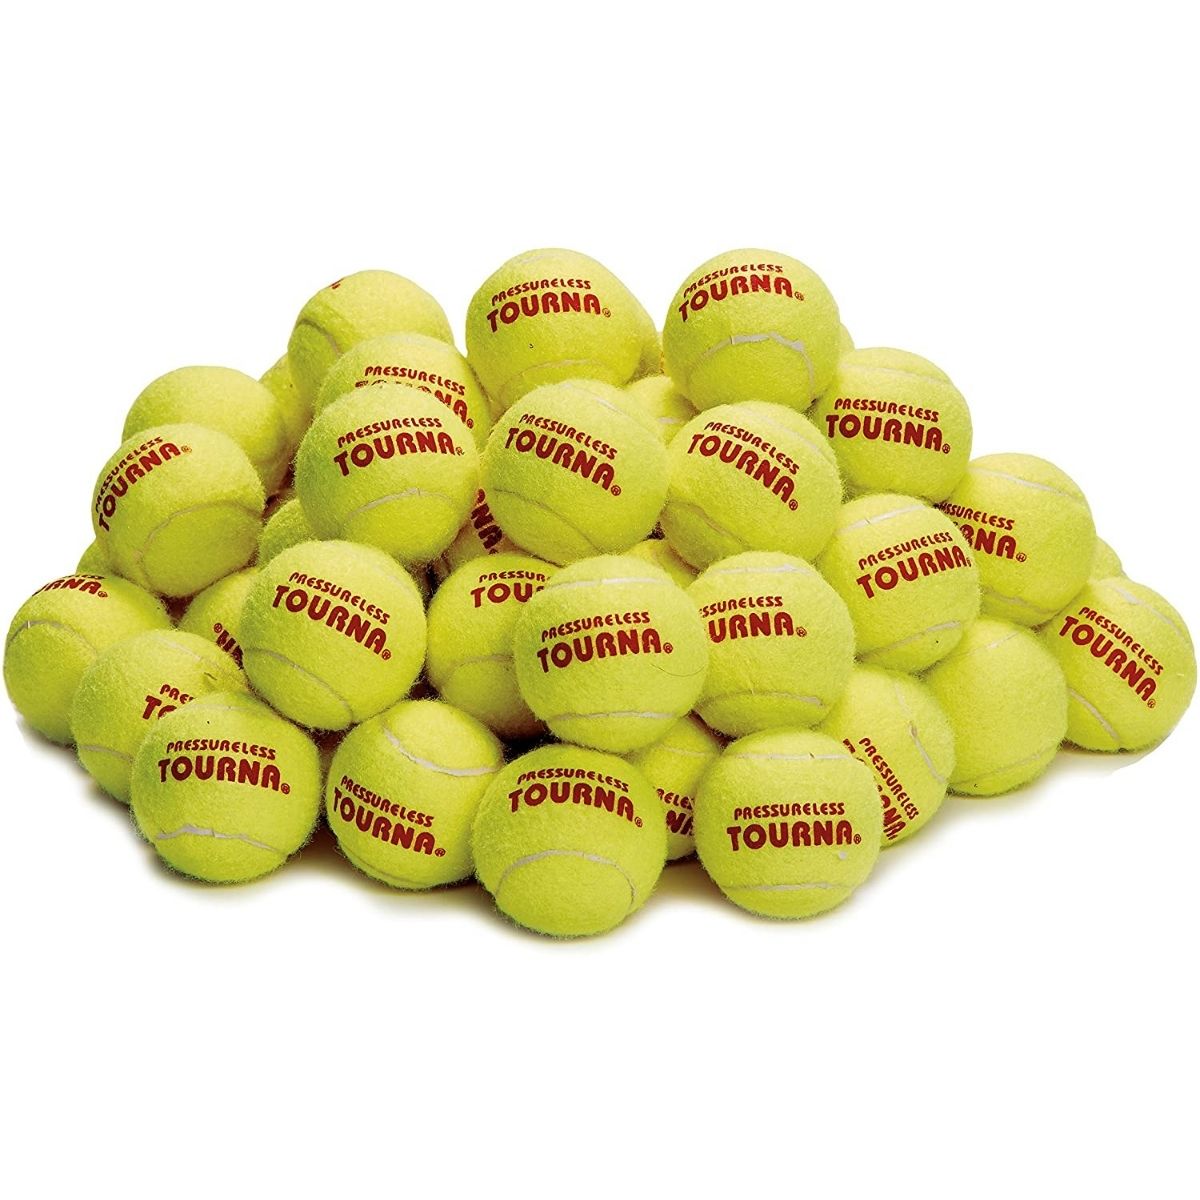 The Best Pressureless Tennis Balls Option: Tourna Pressureless Tennis Balls